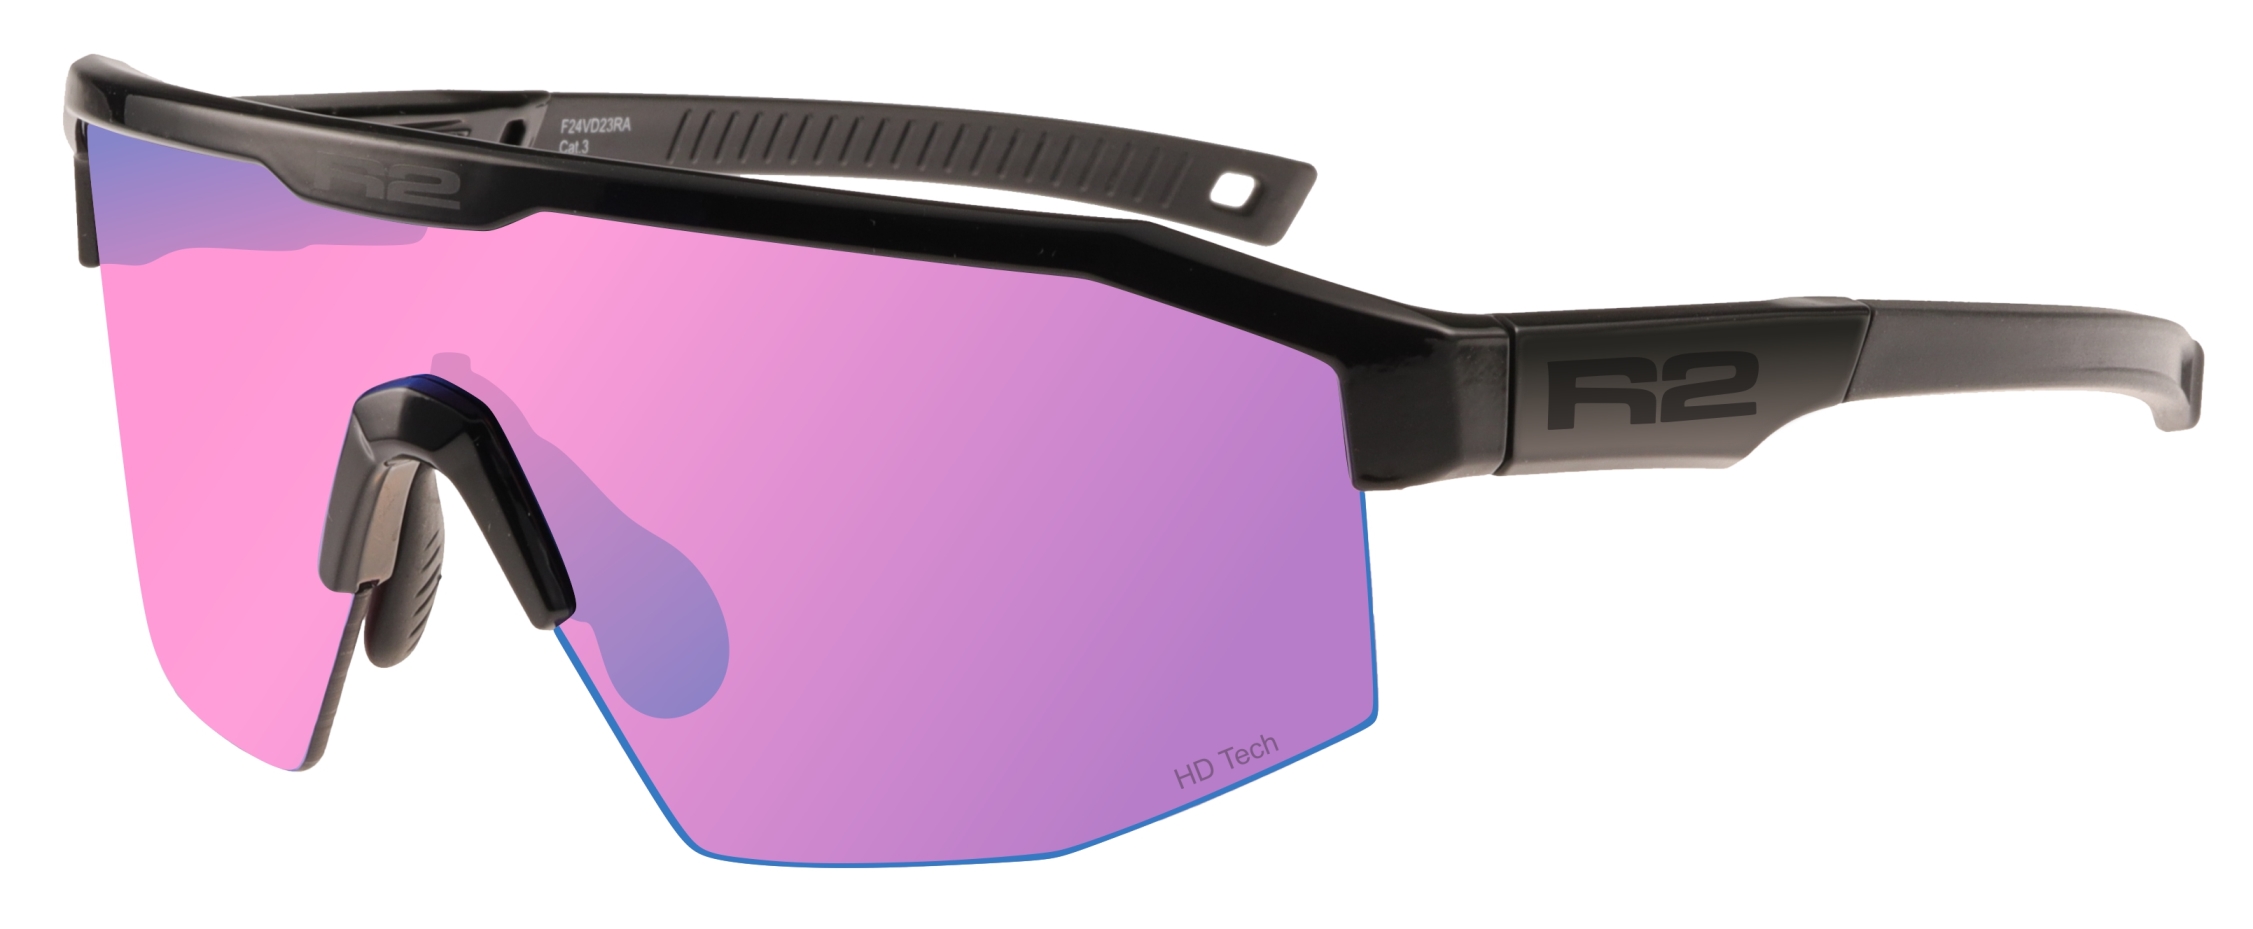 HD sport sunglasses R2 GAIN AT108A